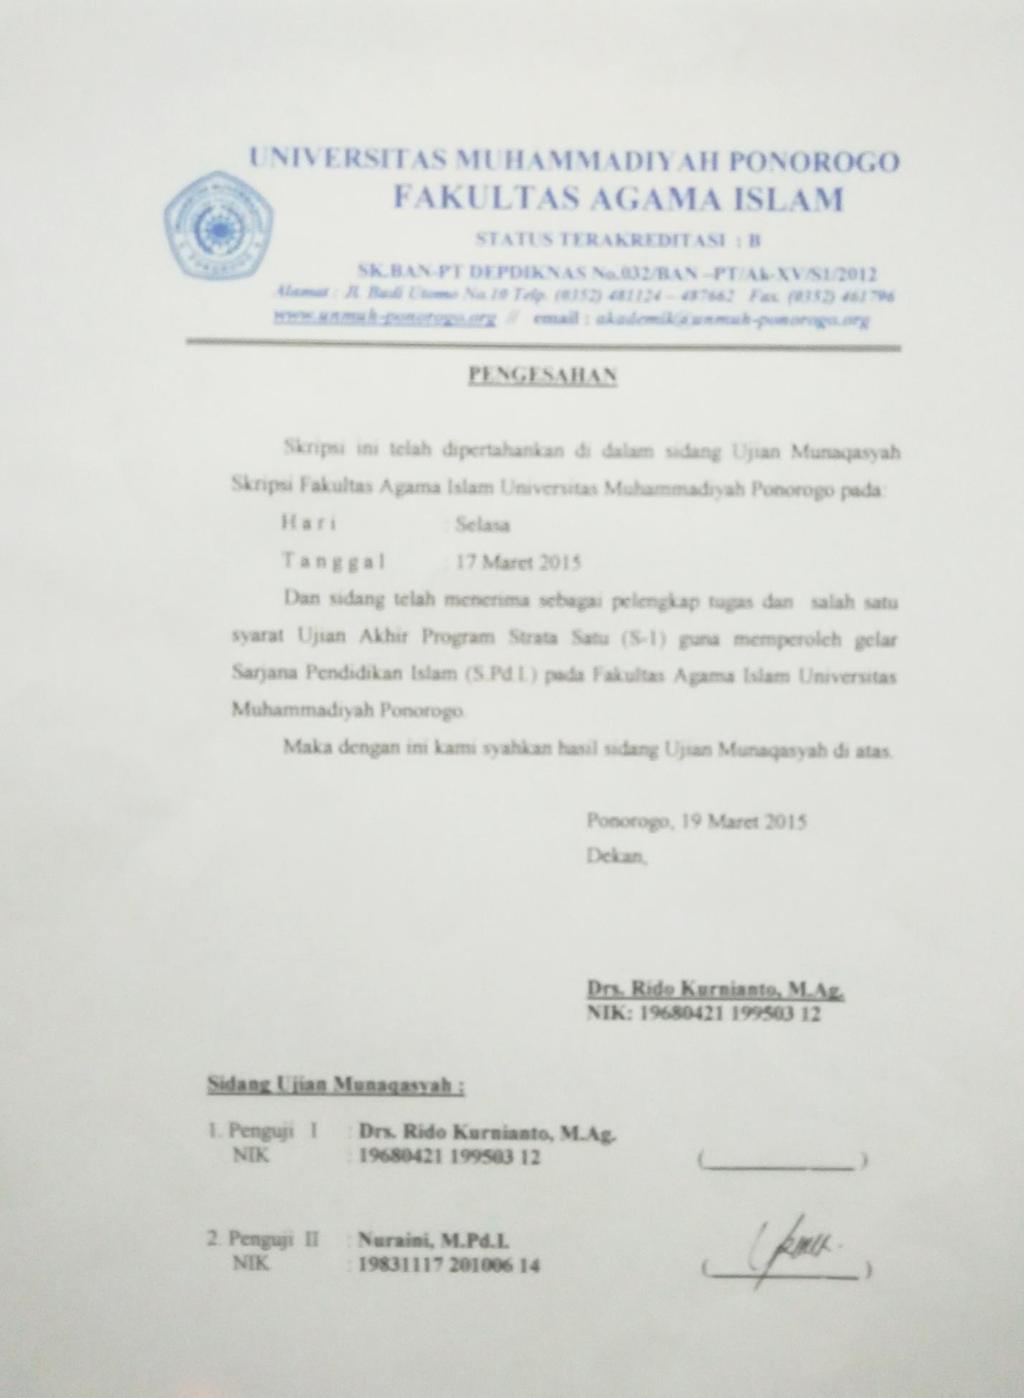 PENGESAHAN Skripsi ini telah dipertahankan didalam sidang ujian munaqasyah skripsi Fakultas Agama Islam Universitas Muhammadiyah Ponorogo pada H a r i : T a n g g a l : Dan sidang telah menerima